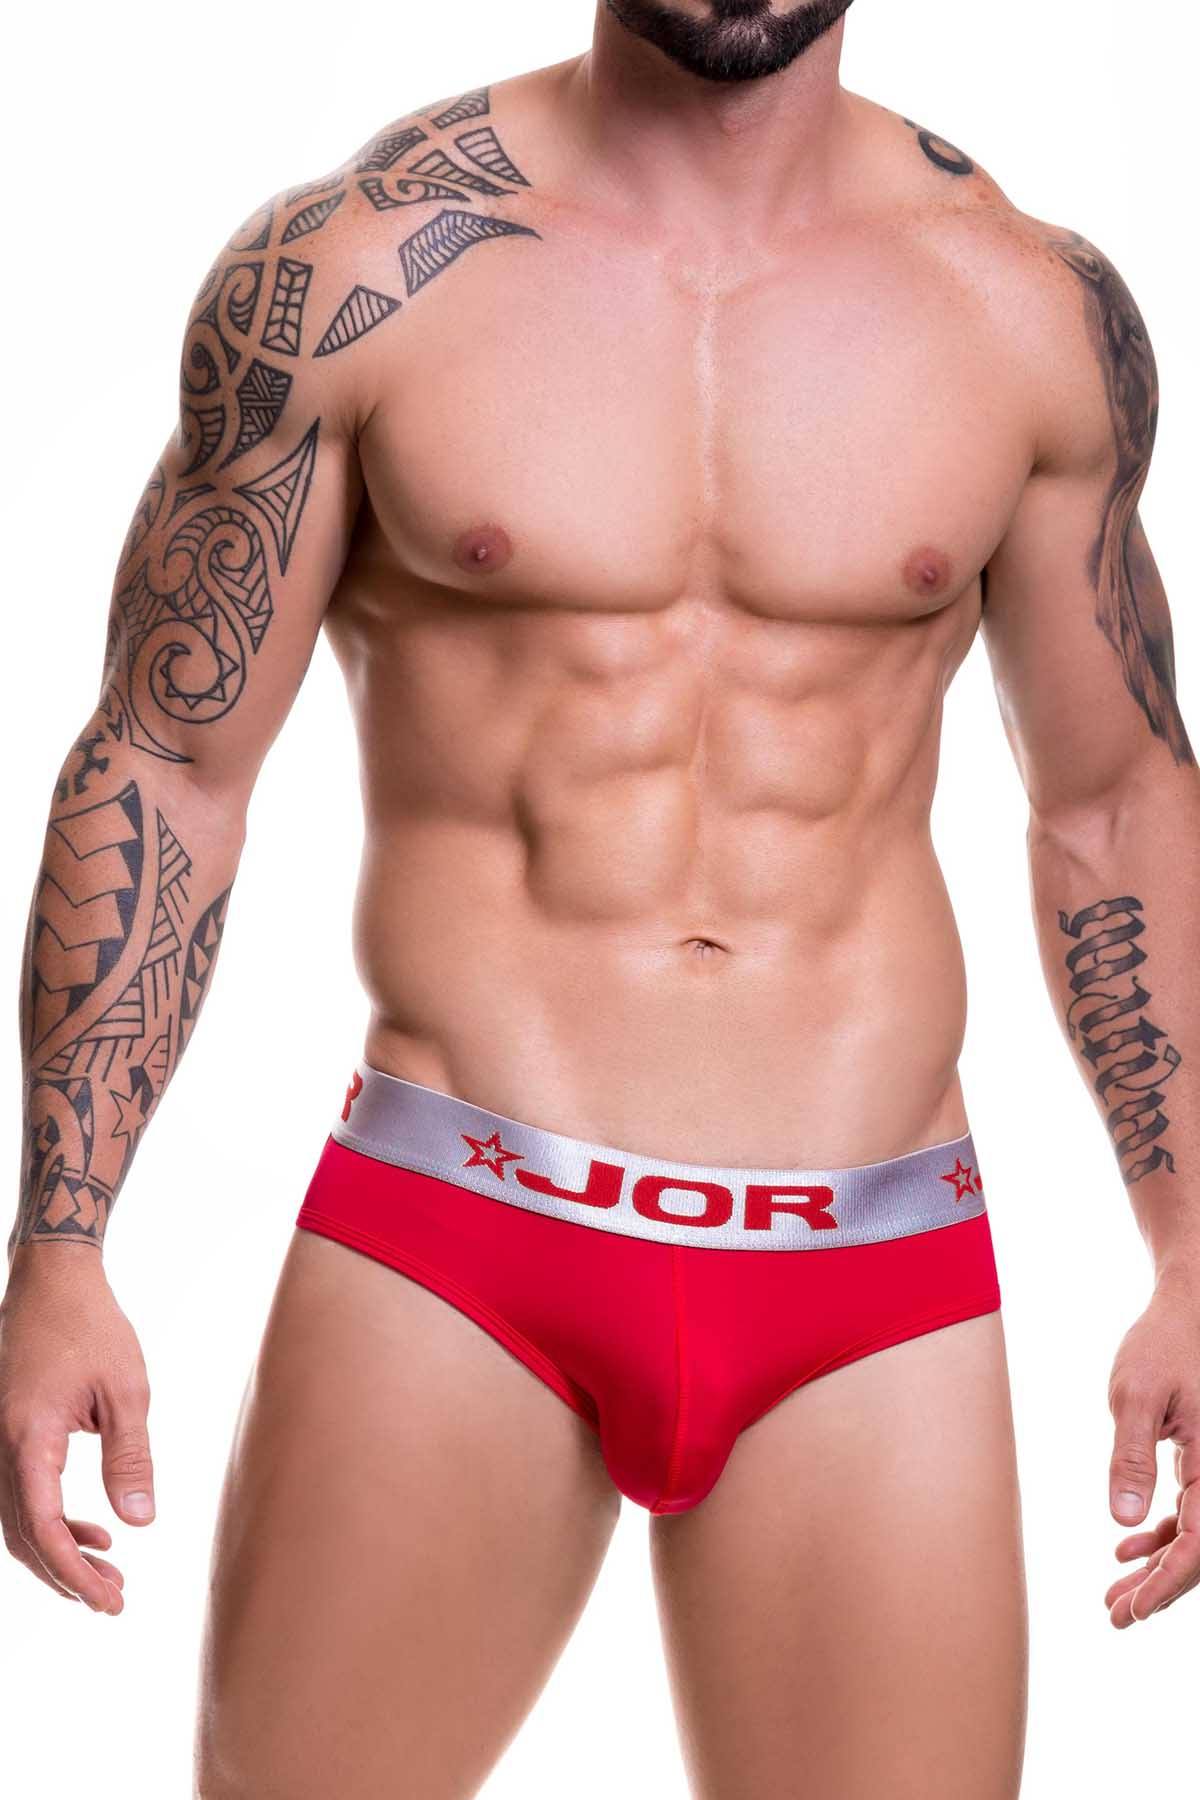 Jor Red/Silver Soft Bikini Brief